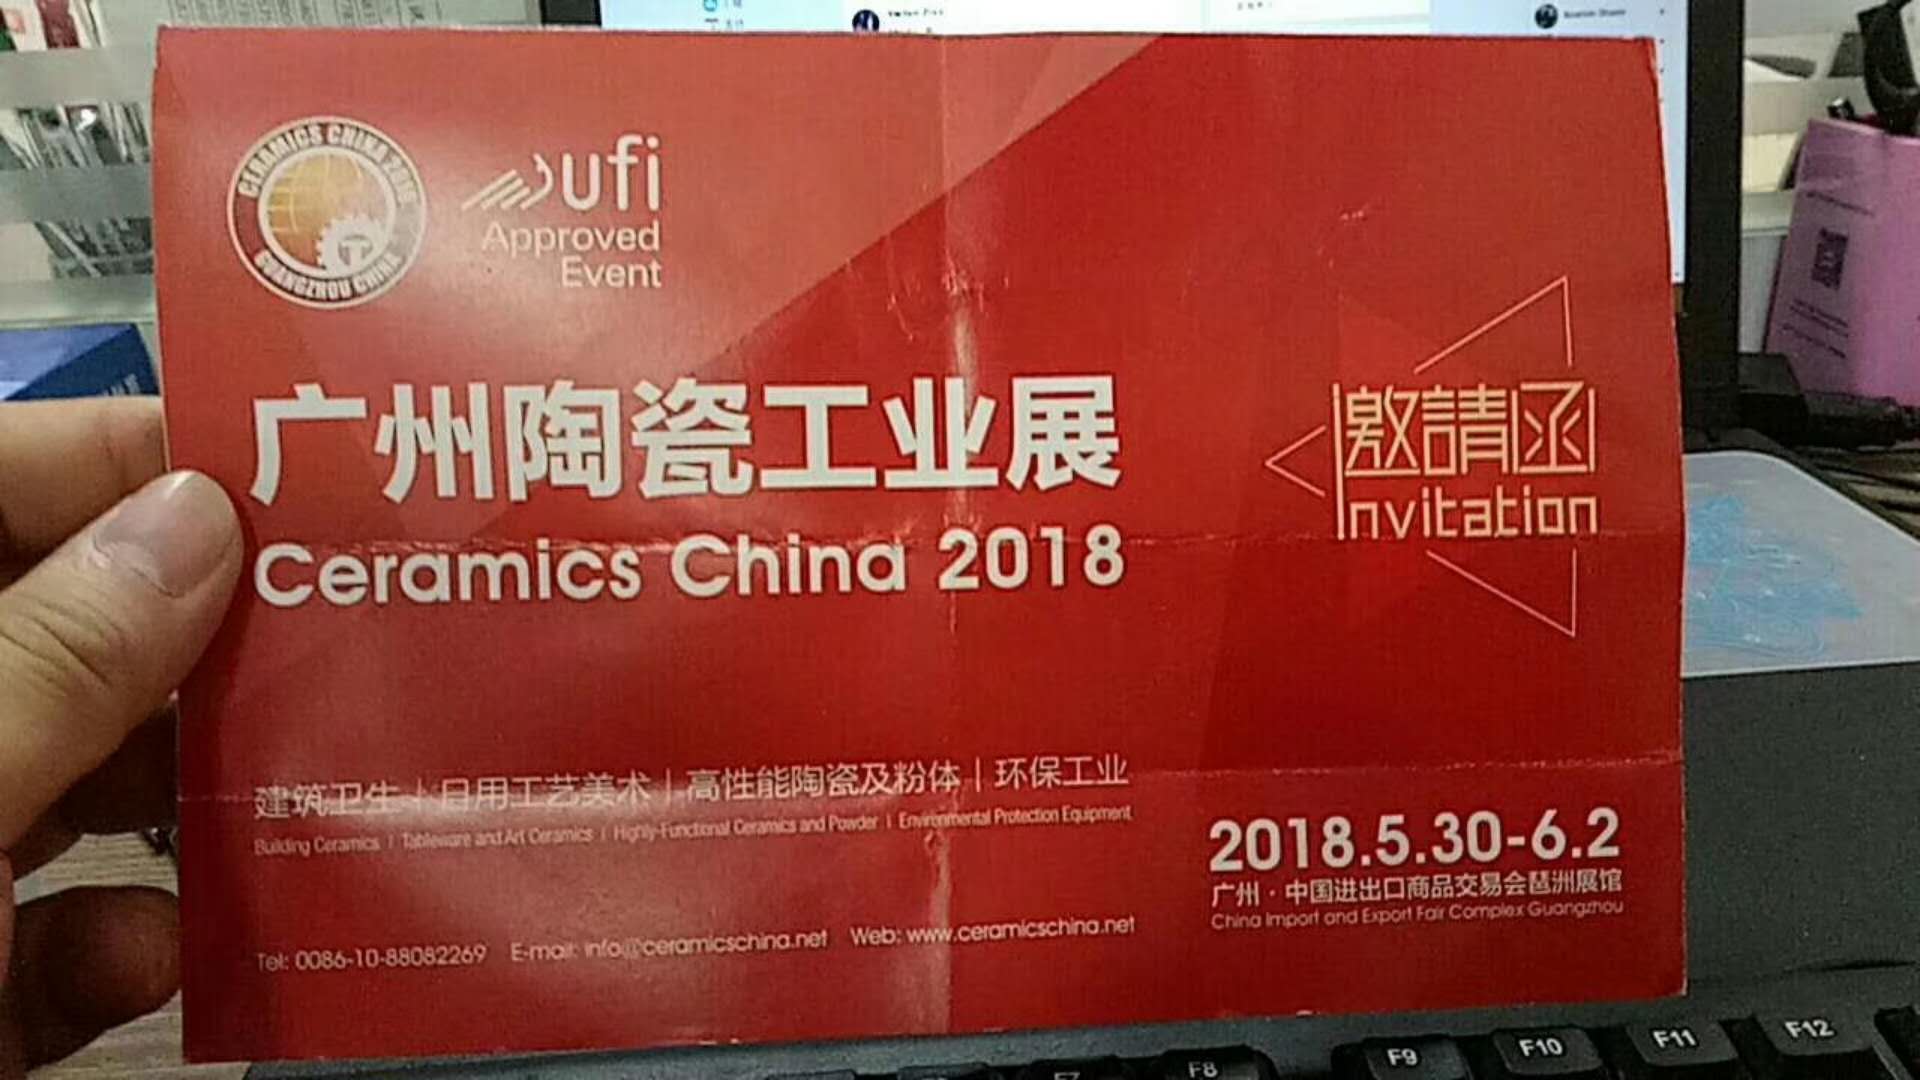 HOLO will attend Ceramics China 2018